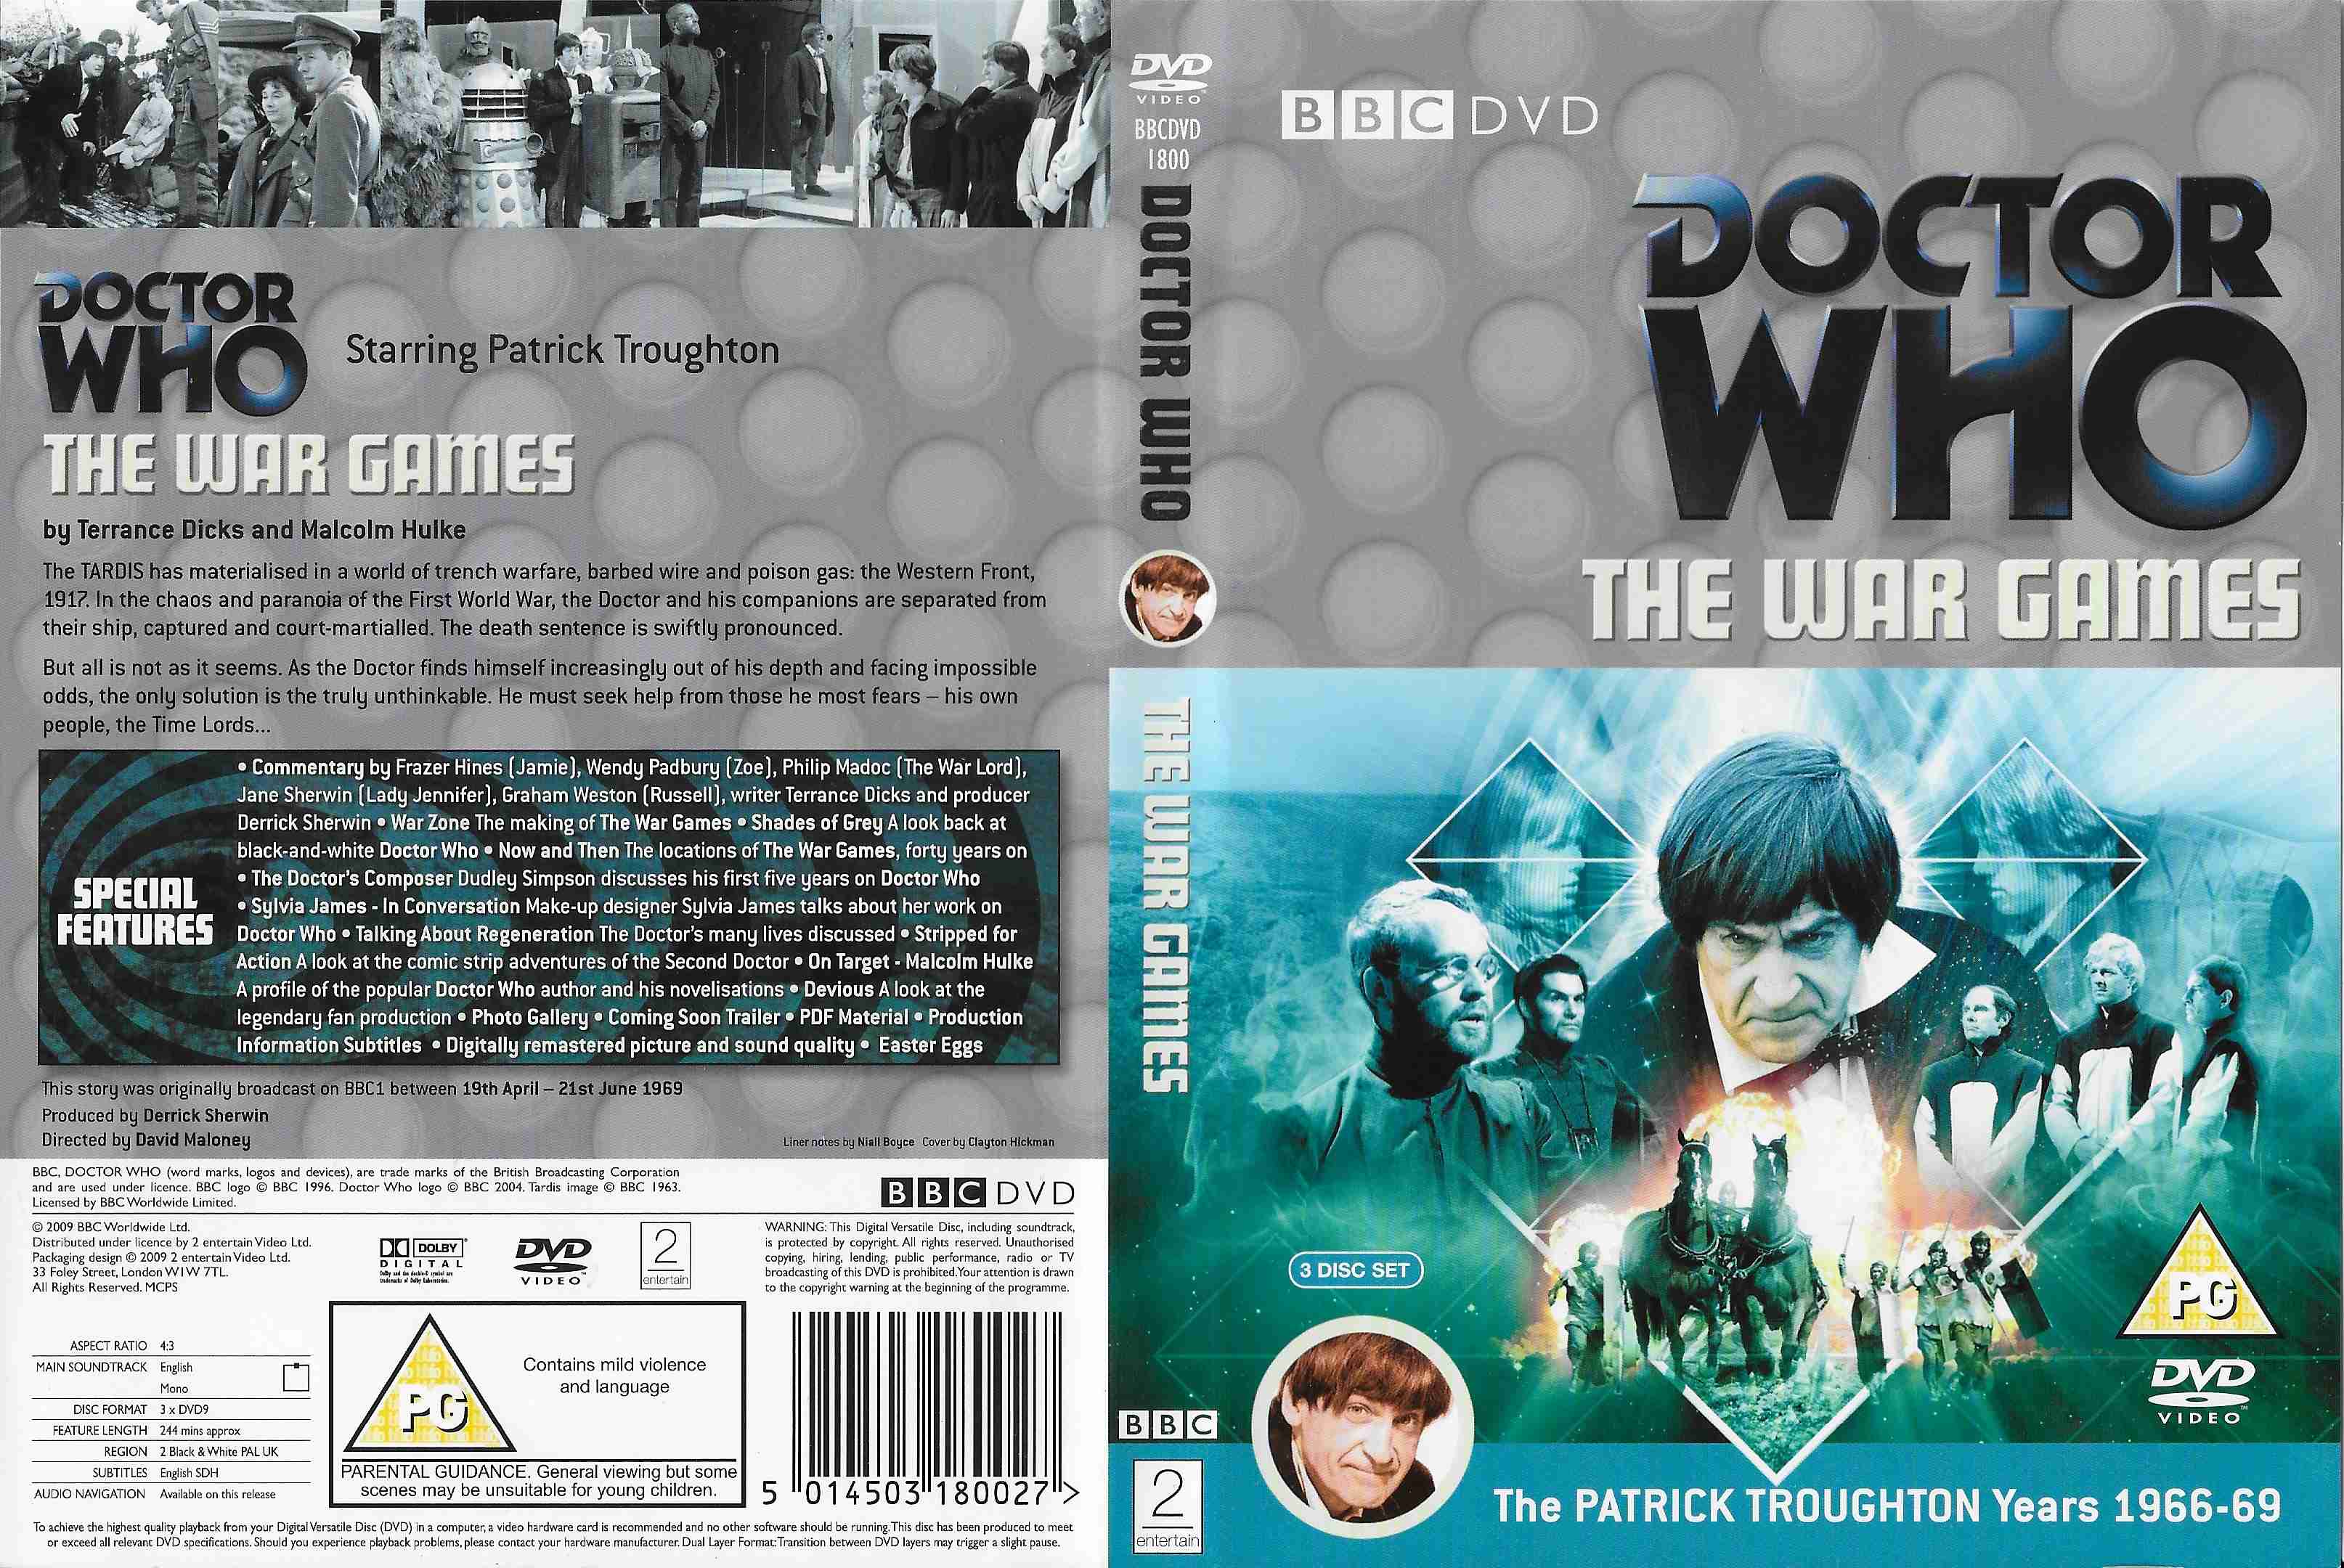 Back cover of BBCDVD 1800